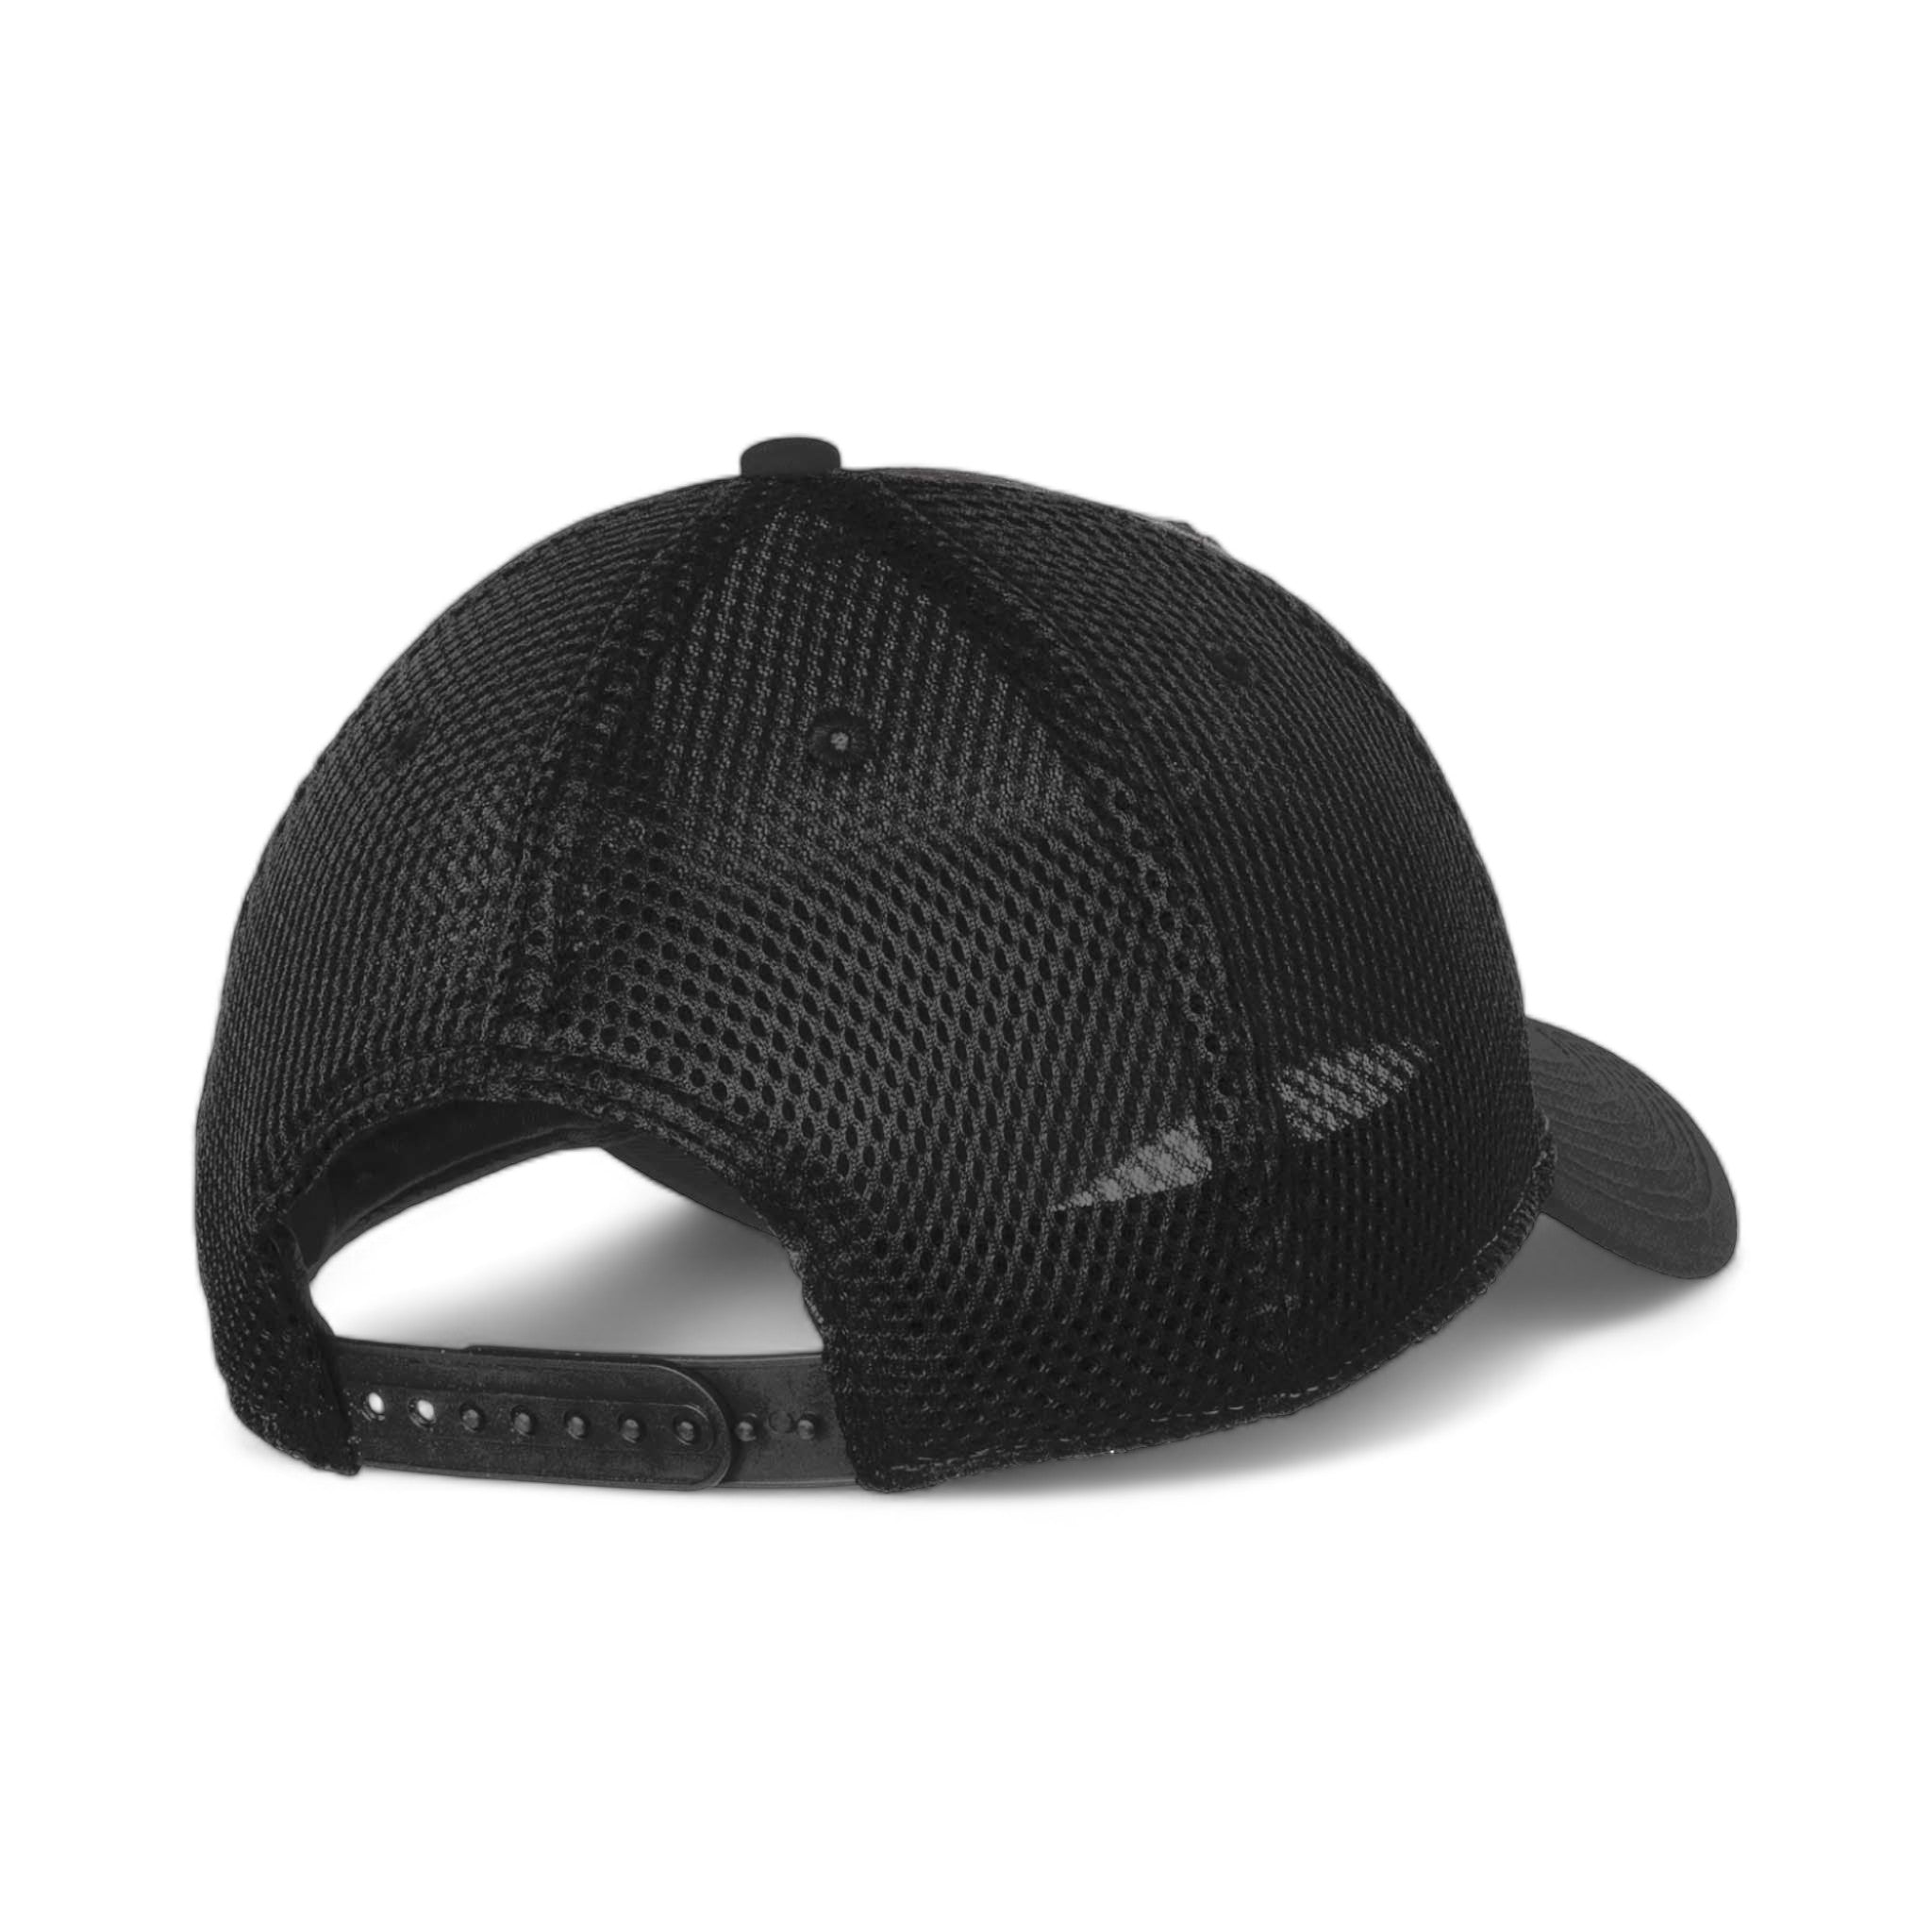 Back view of New Era NE204 custom hat in charcoal and black